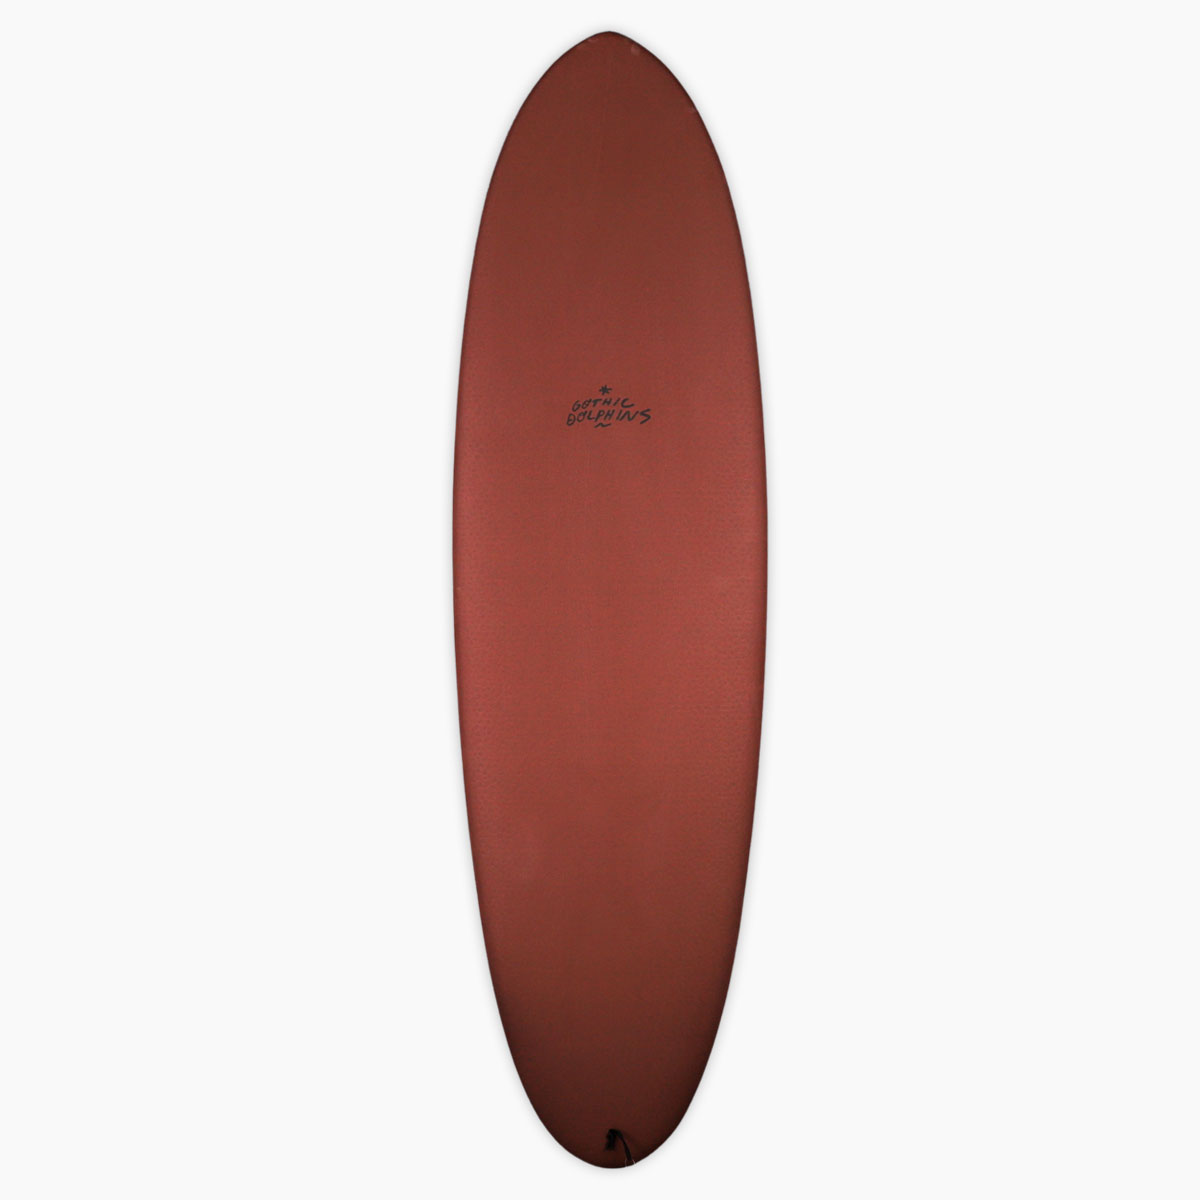 SurfBoardNet / ブランド:CRIME SURFBOARDS モデル:GOTHIC DOLPHINS